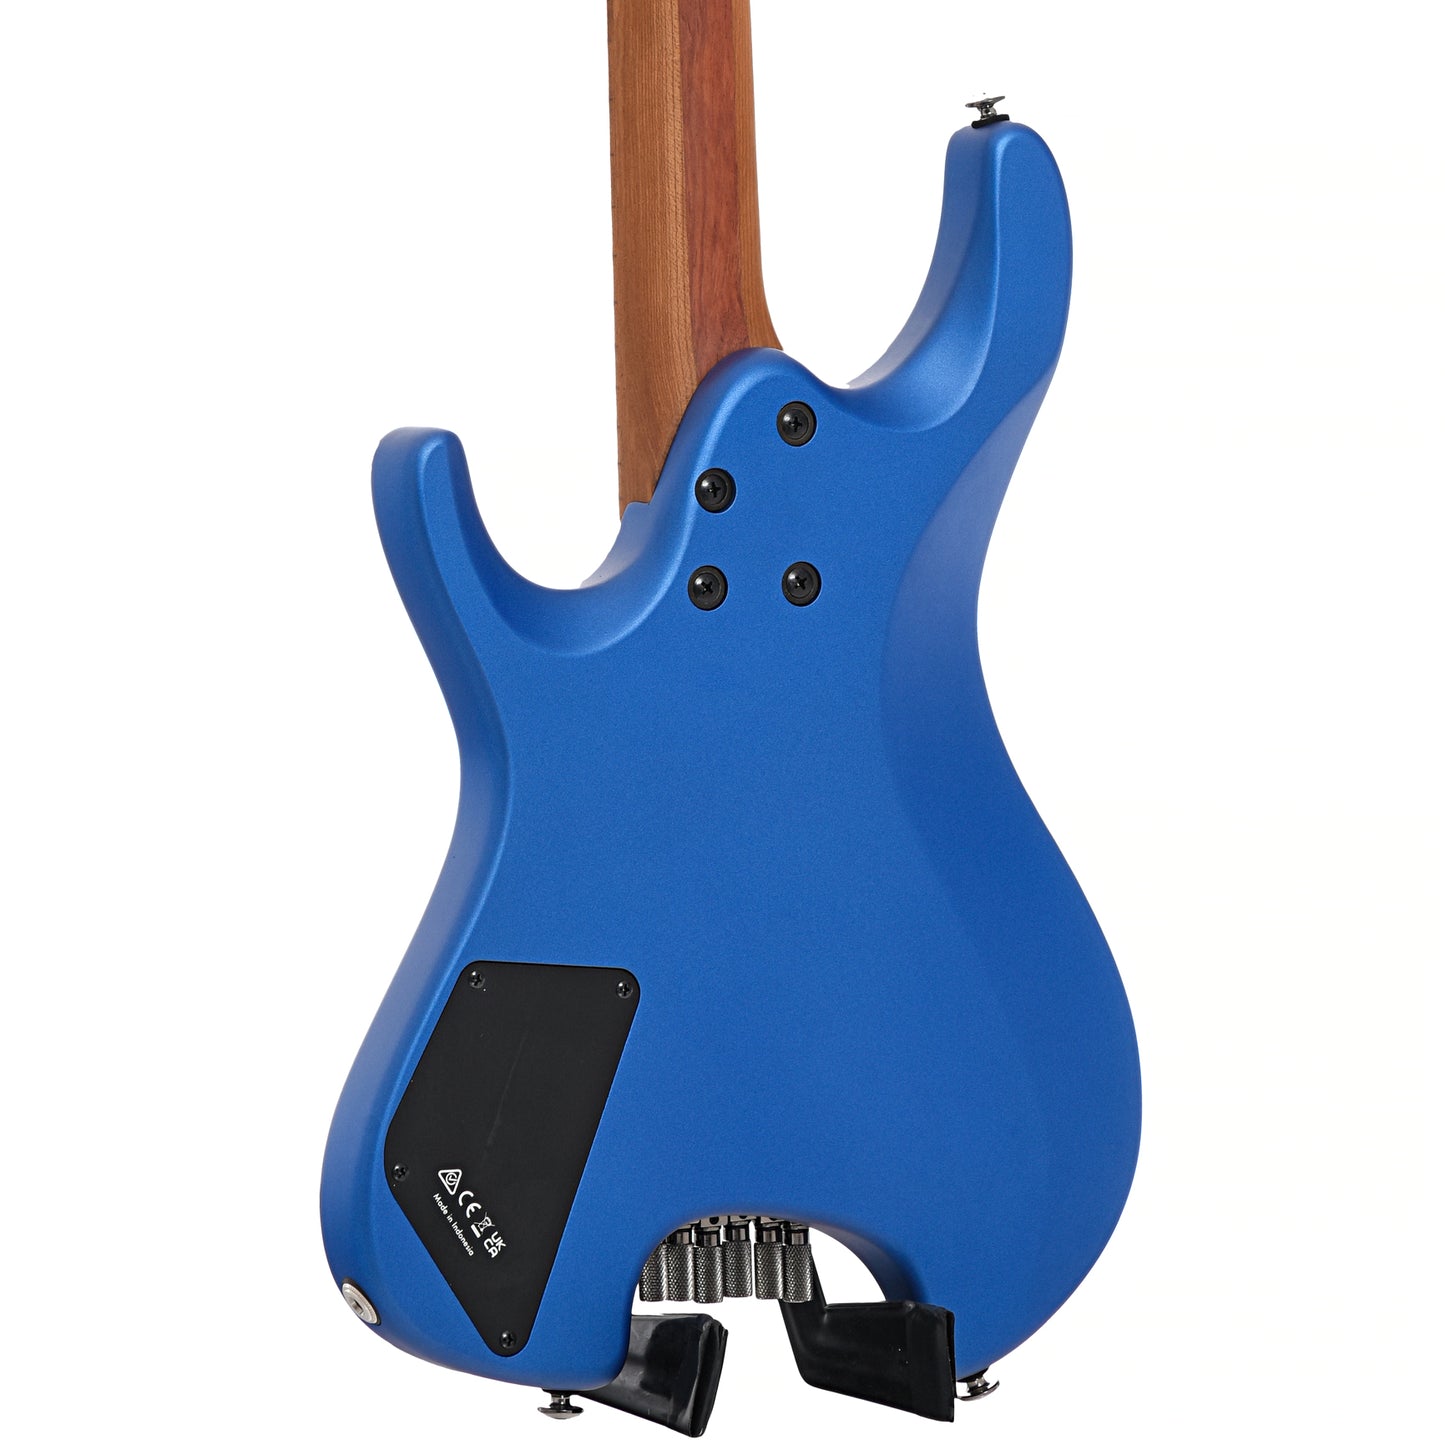 Back and side of Ibanez Q52 Electric Guitar, Laser Blue Matte